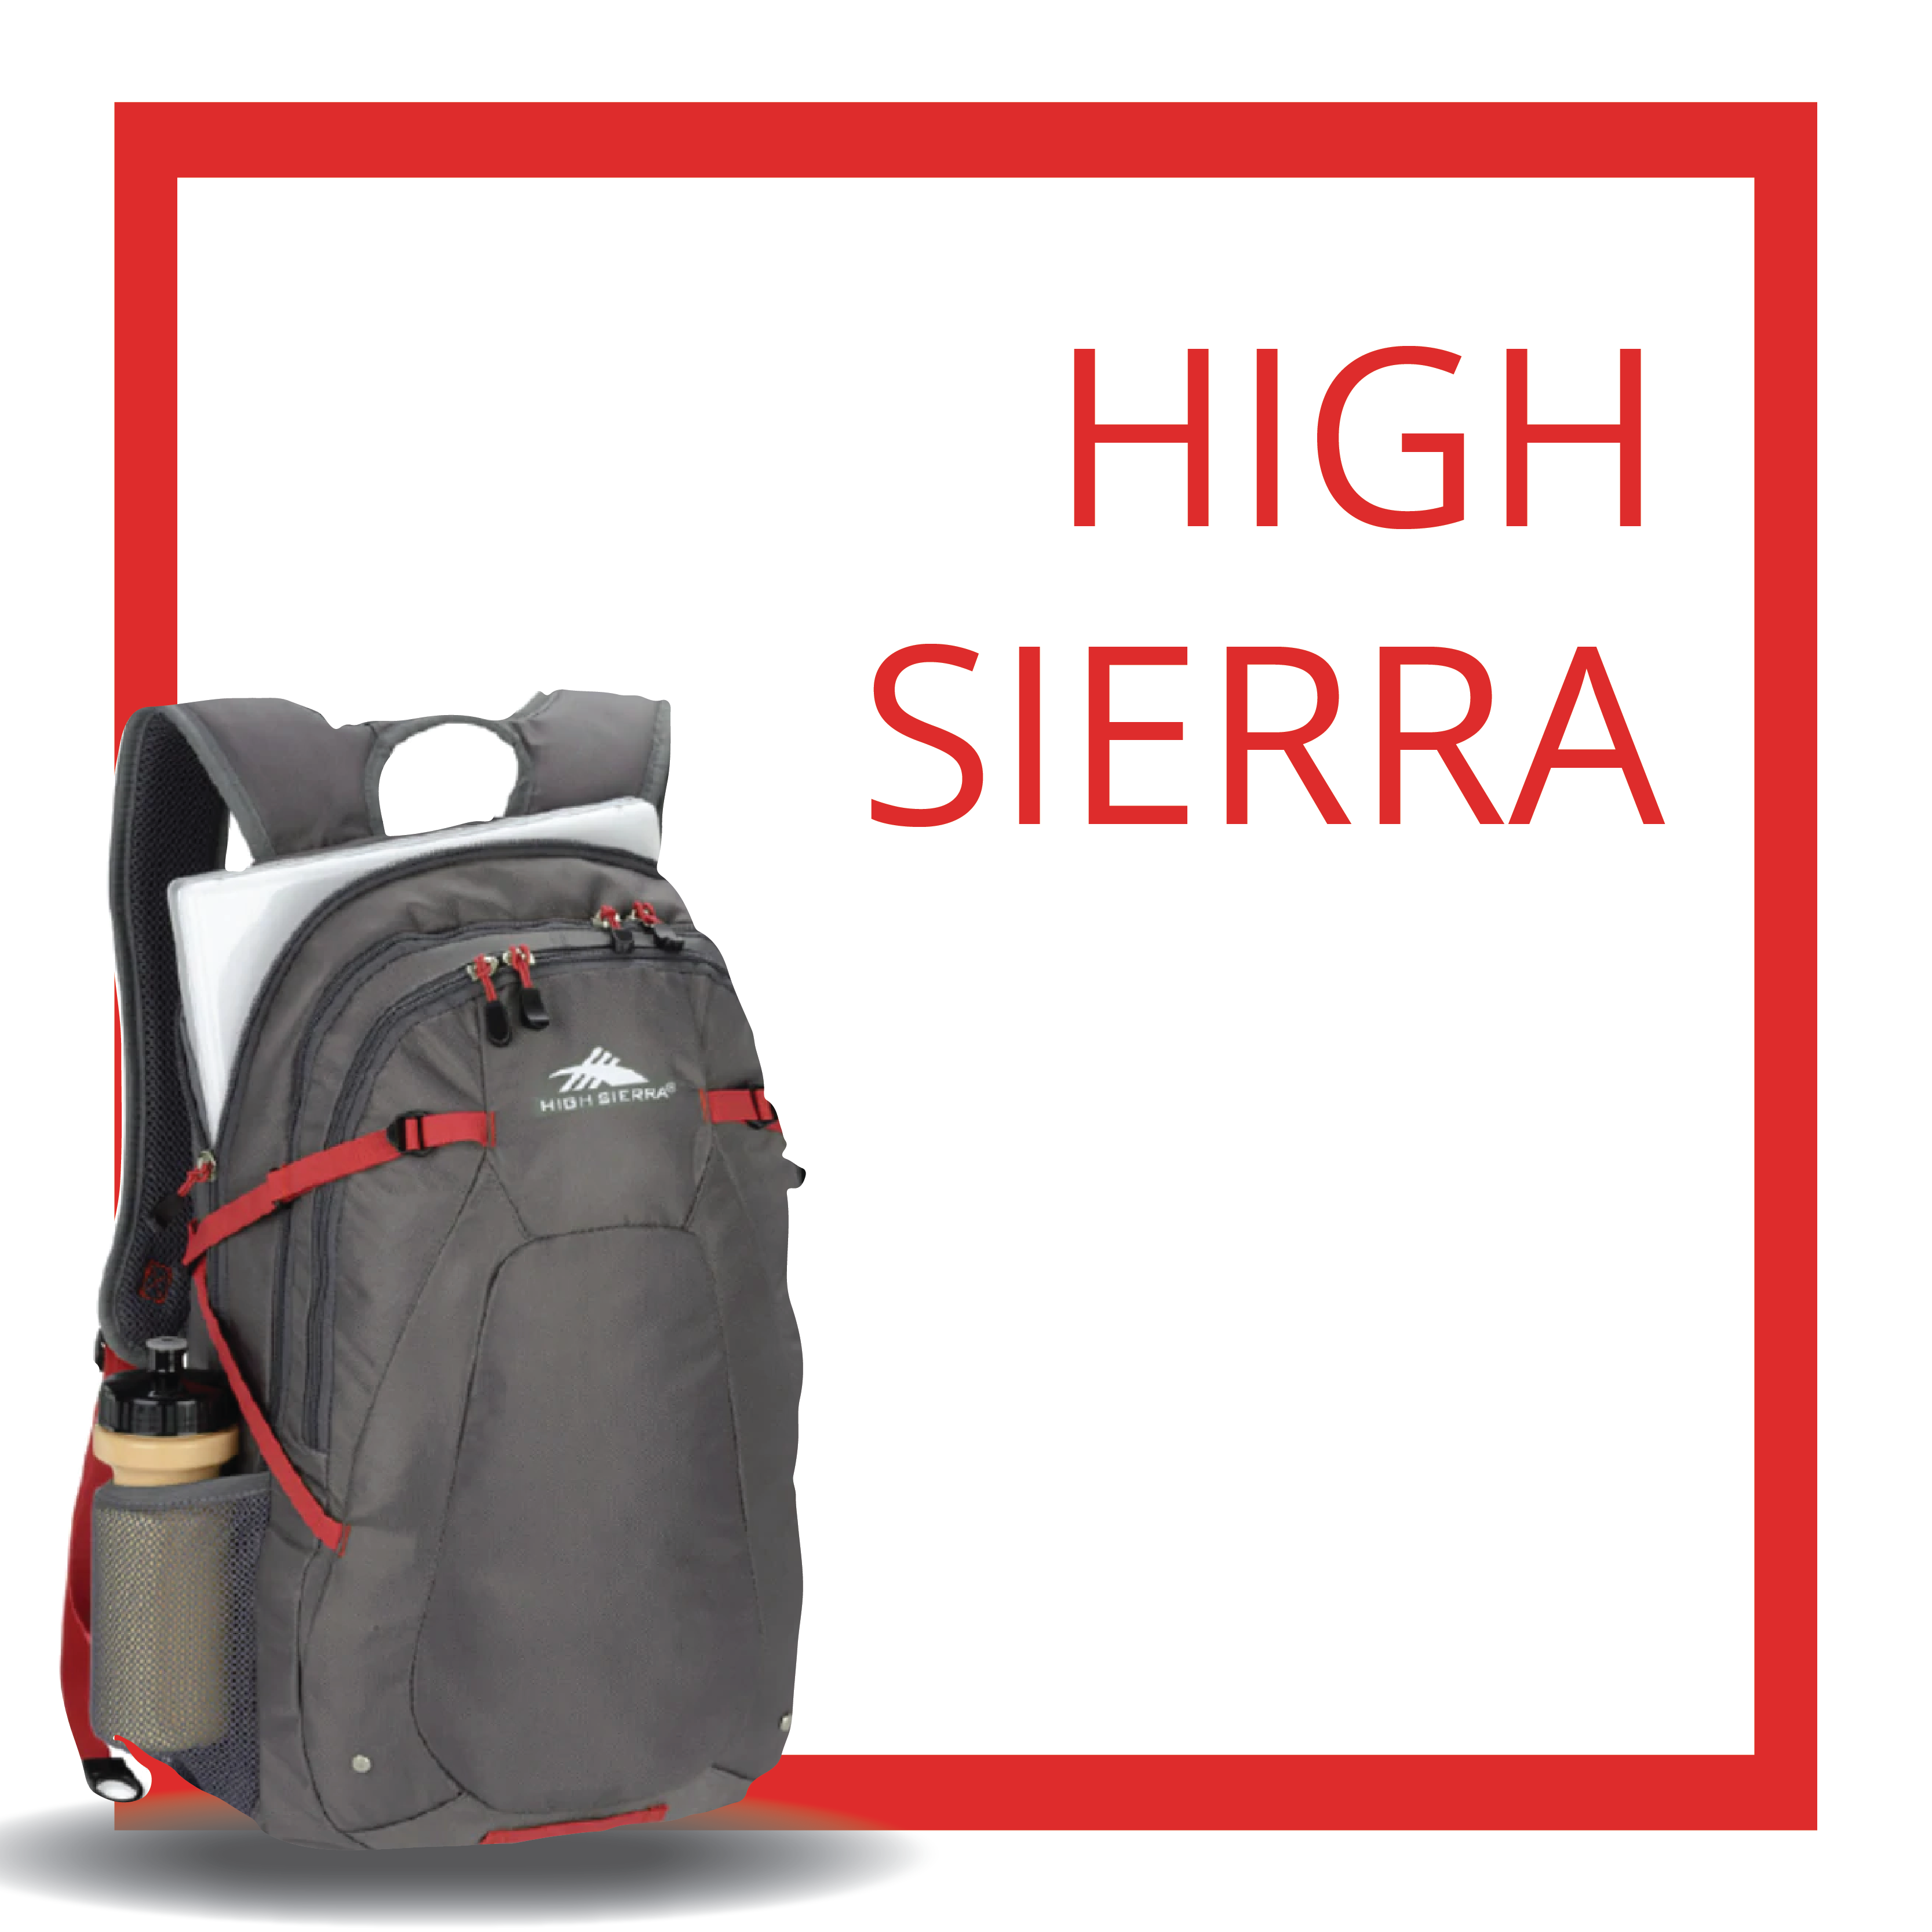 High sierra 17 computer ubt deluxe backpack